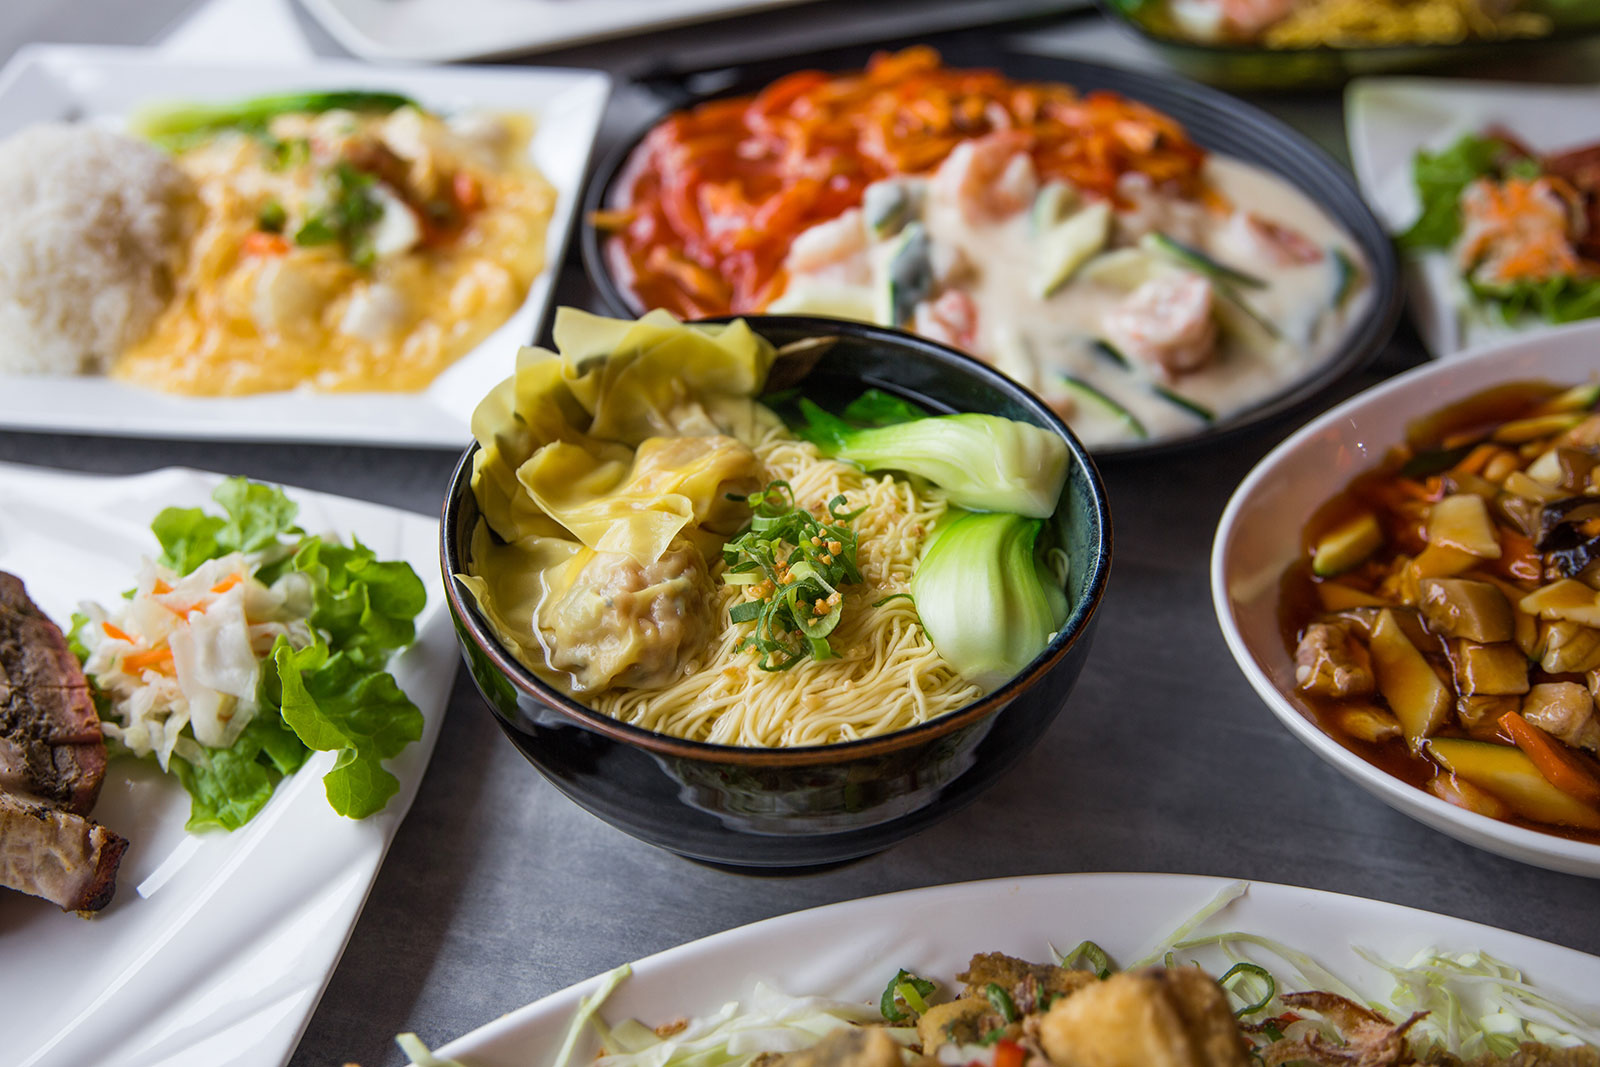 Restaurant Categories hongkong - Abalone, Sea Cucumber, Shark Fin, Fish Maw, Cabbage Stewed in Clay Pot